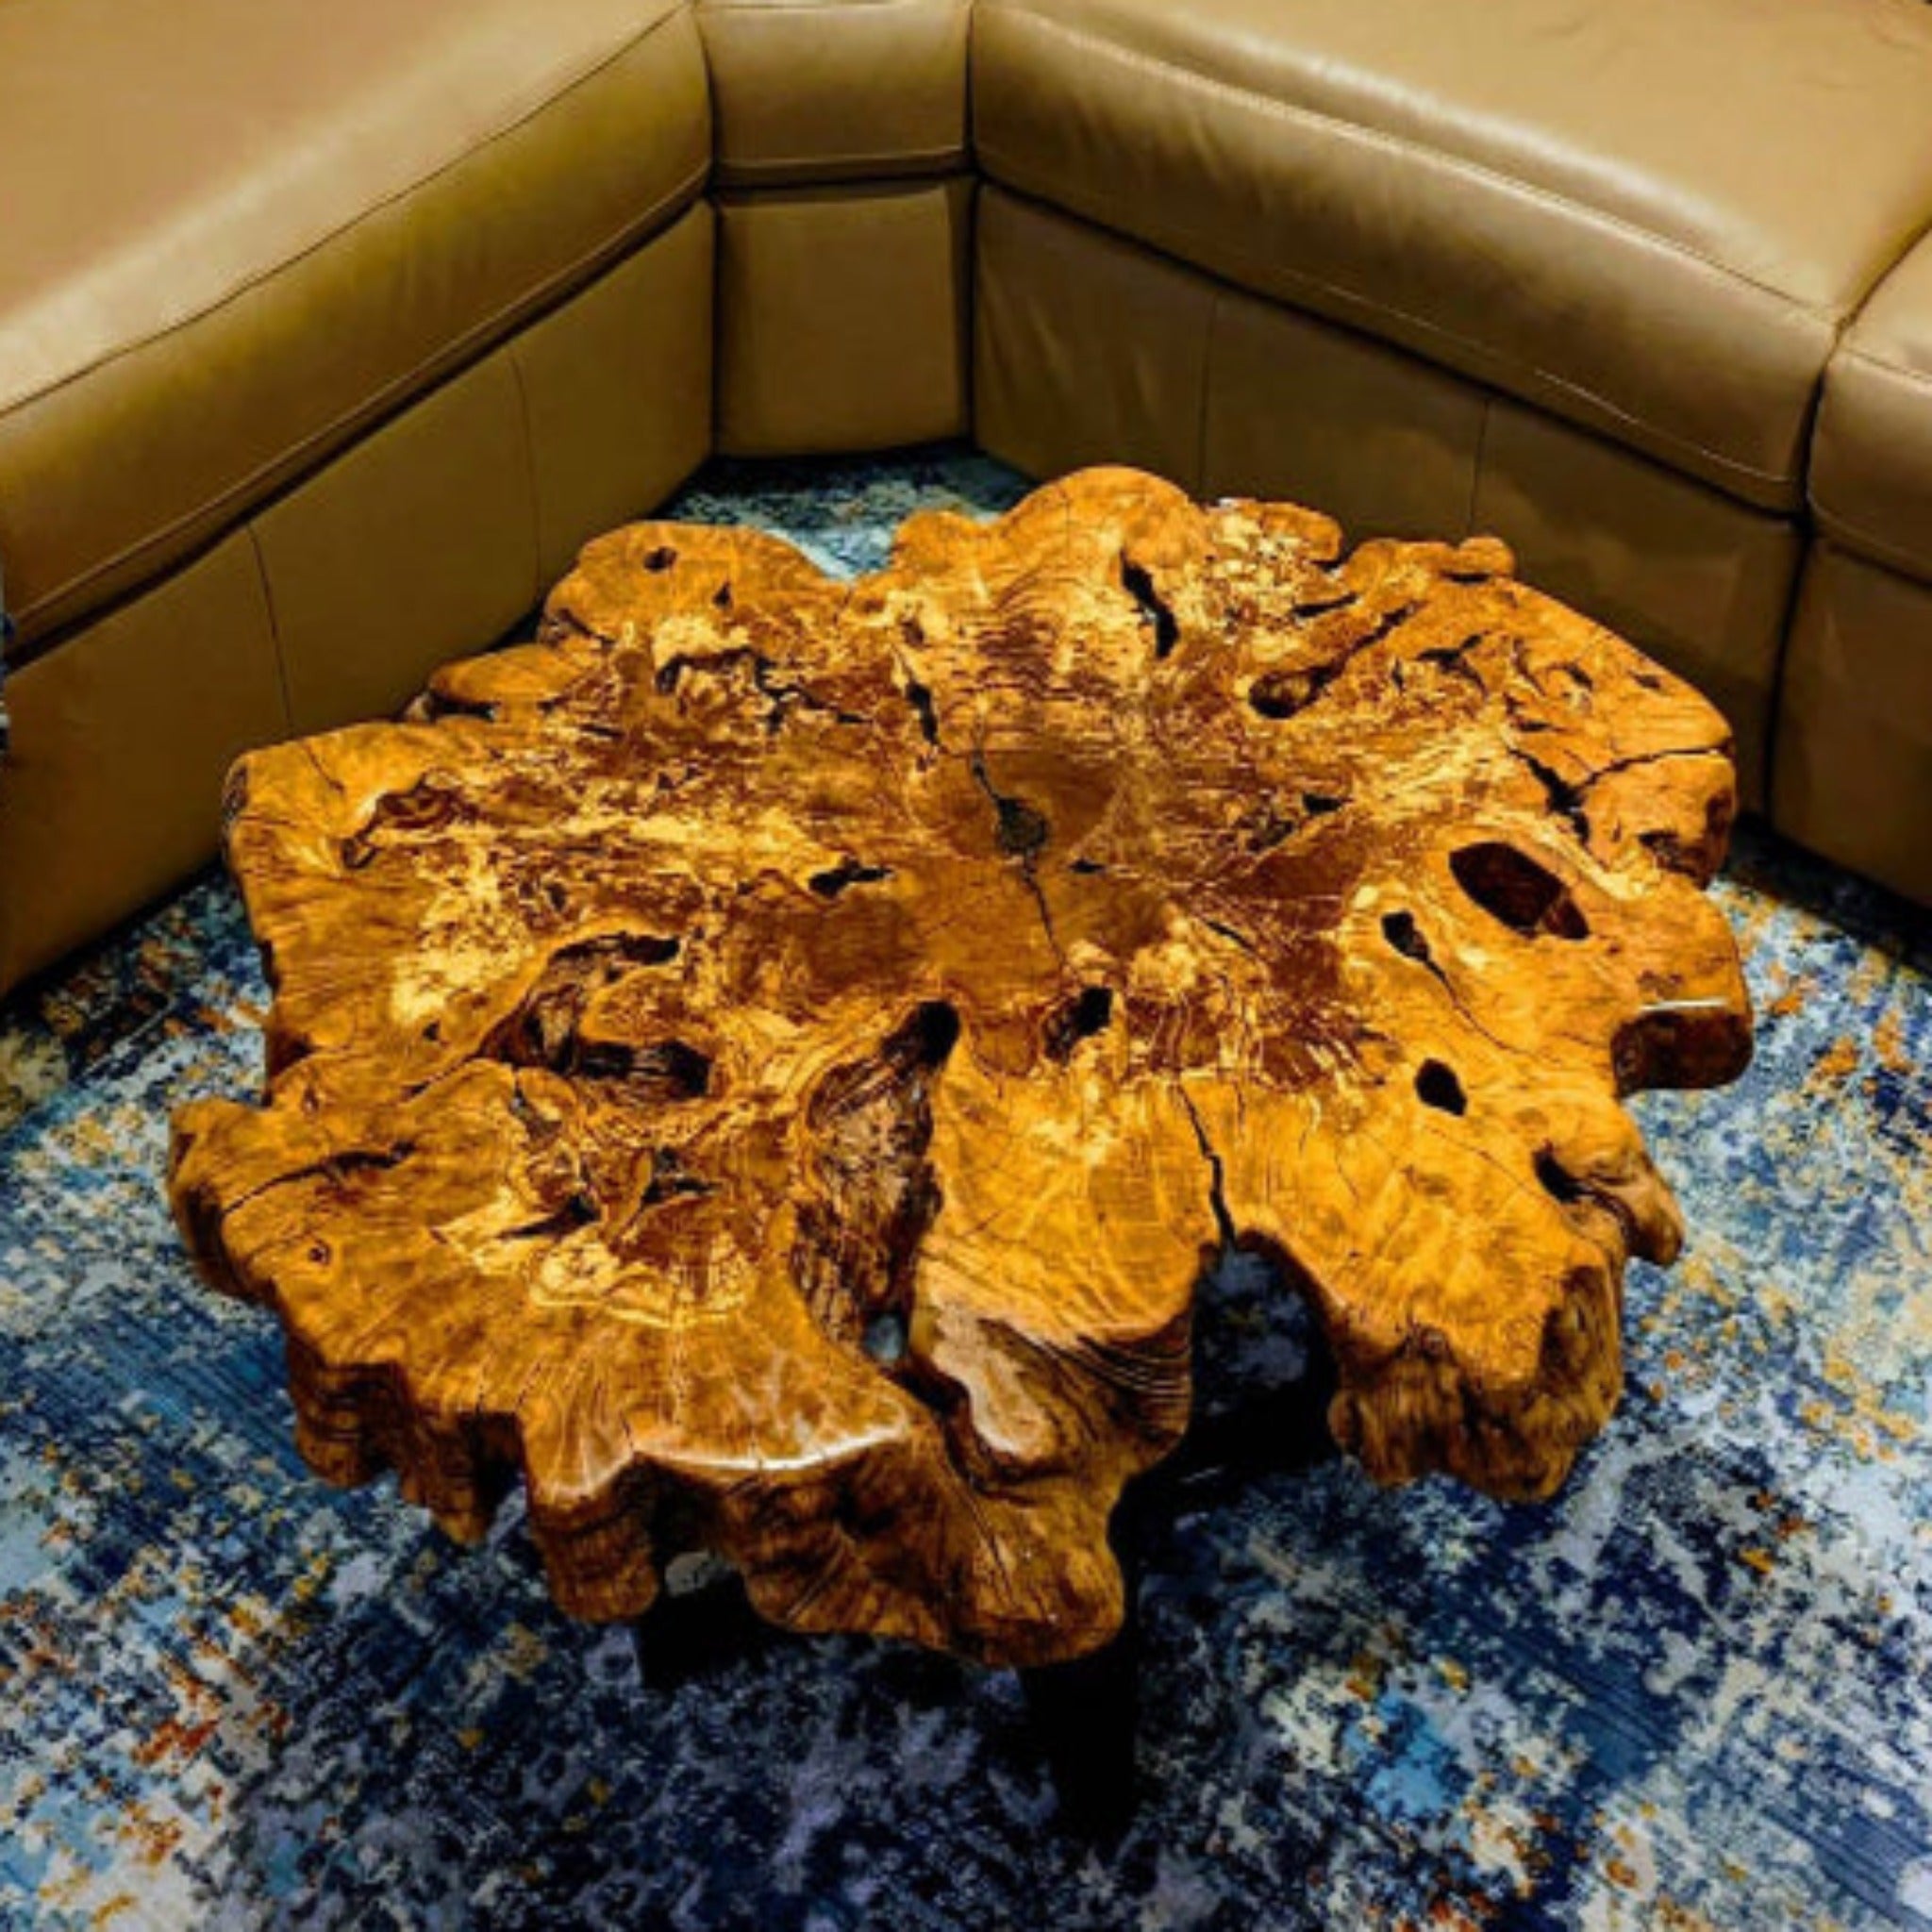 Custom Order 40” Burl Wood Coffee Table